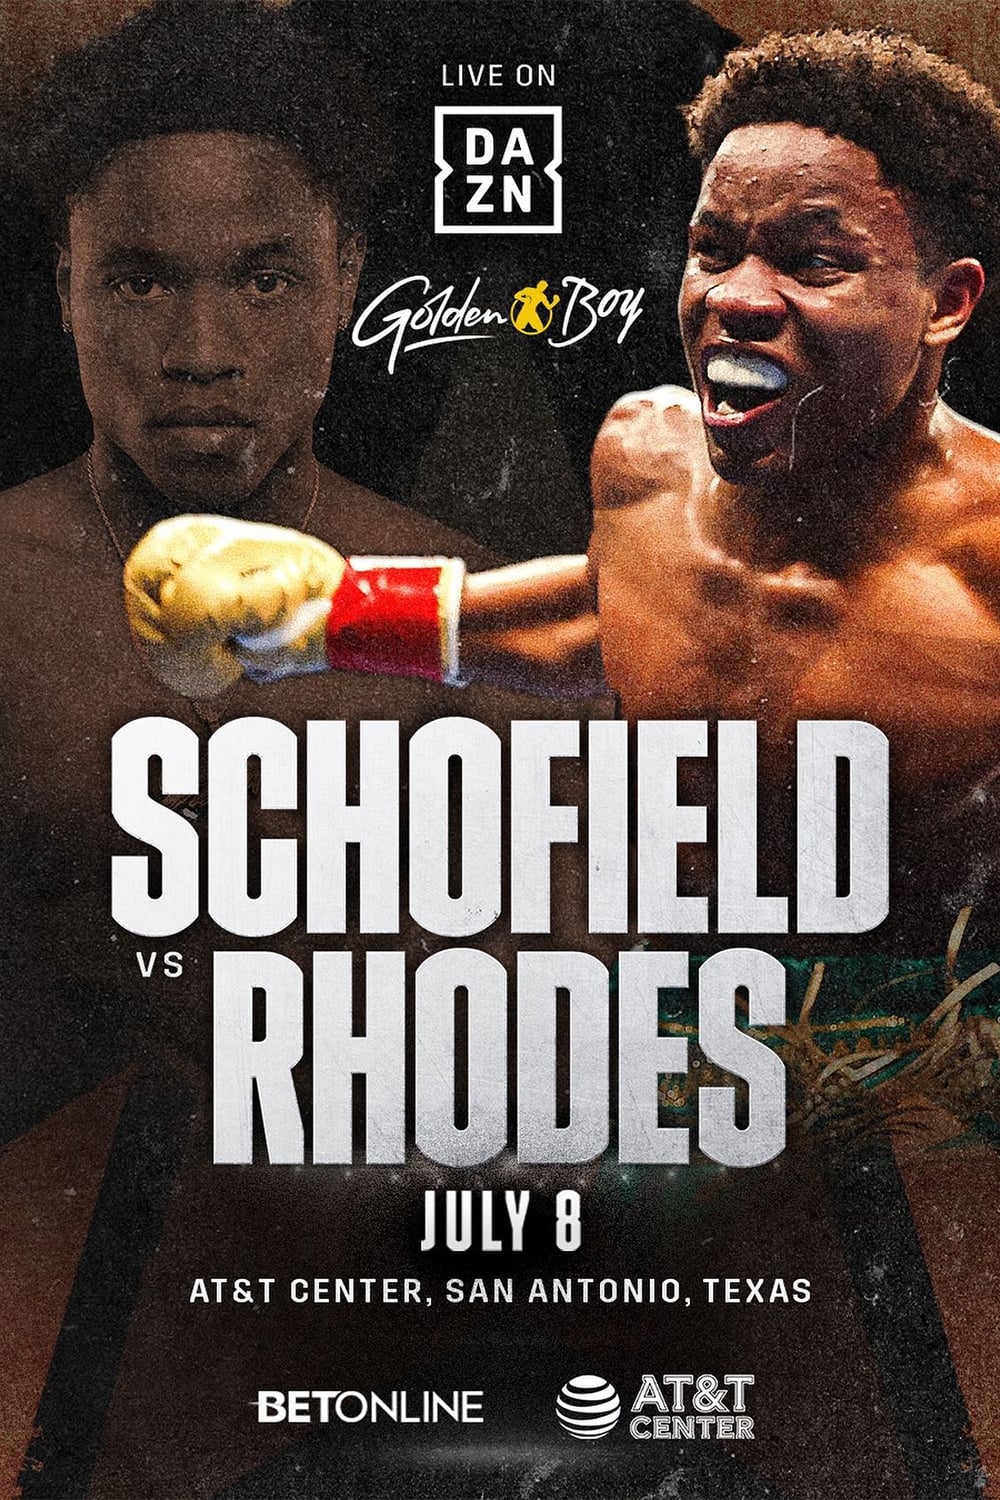 Floyd Schofield vs. Haskell Rhodes